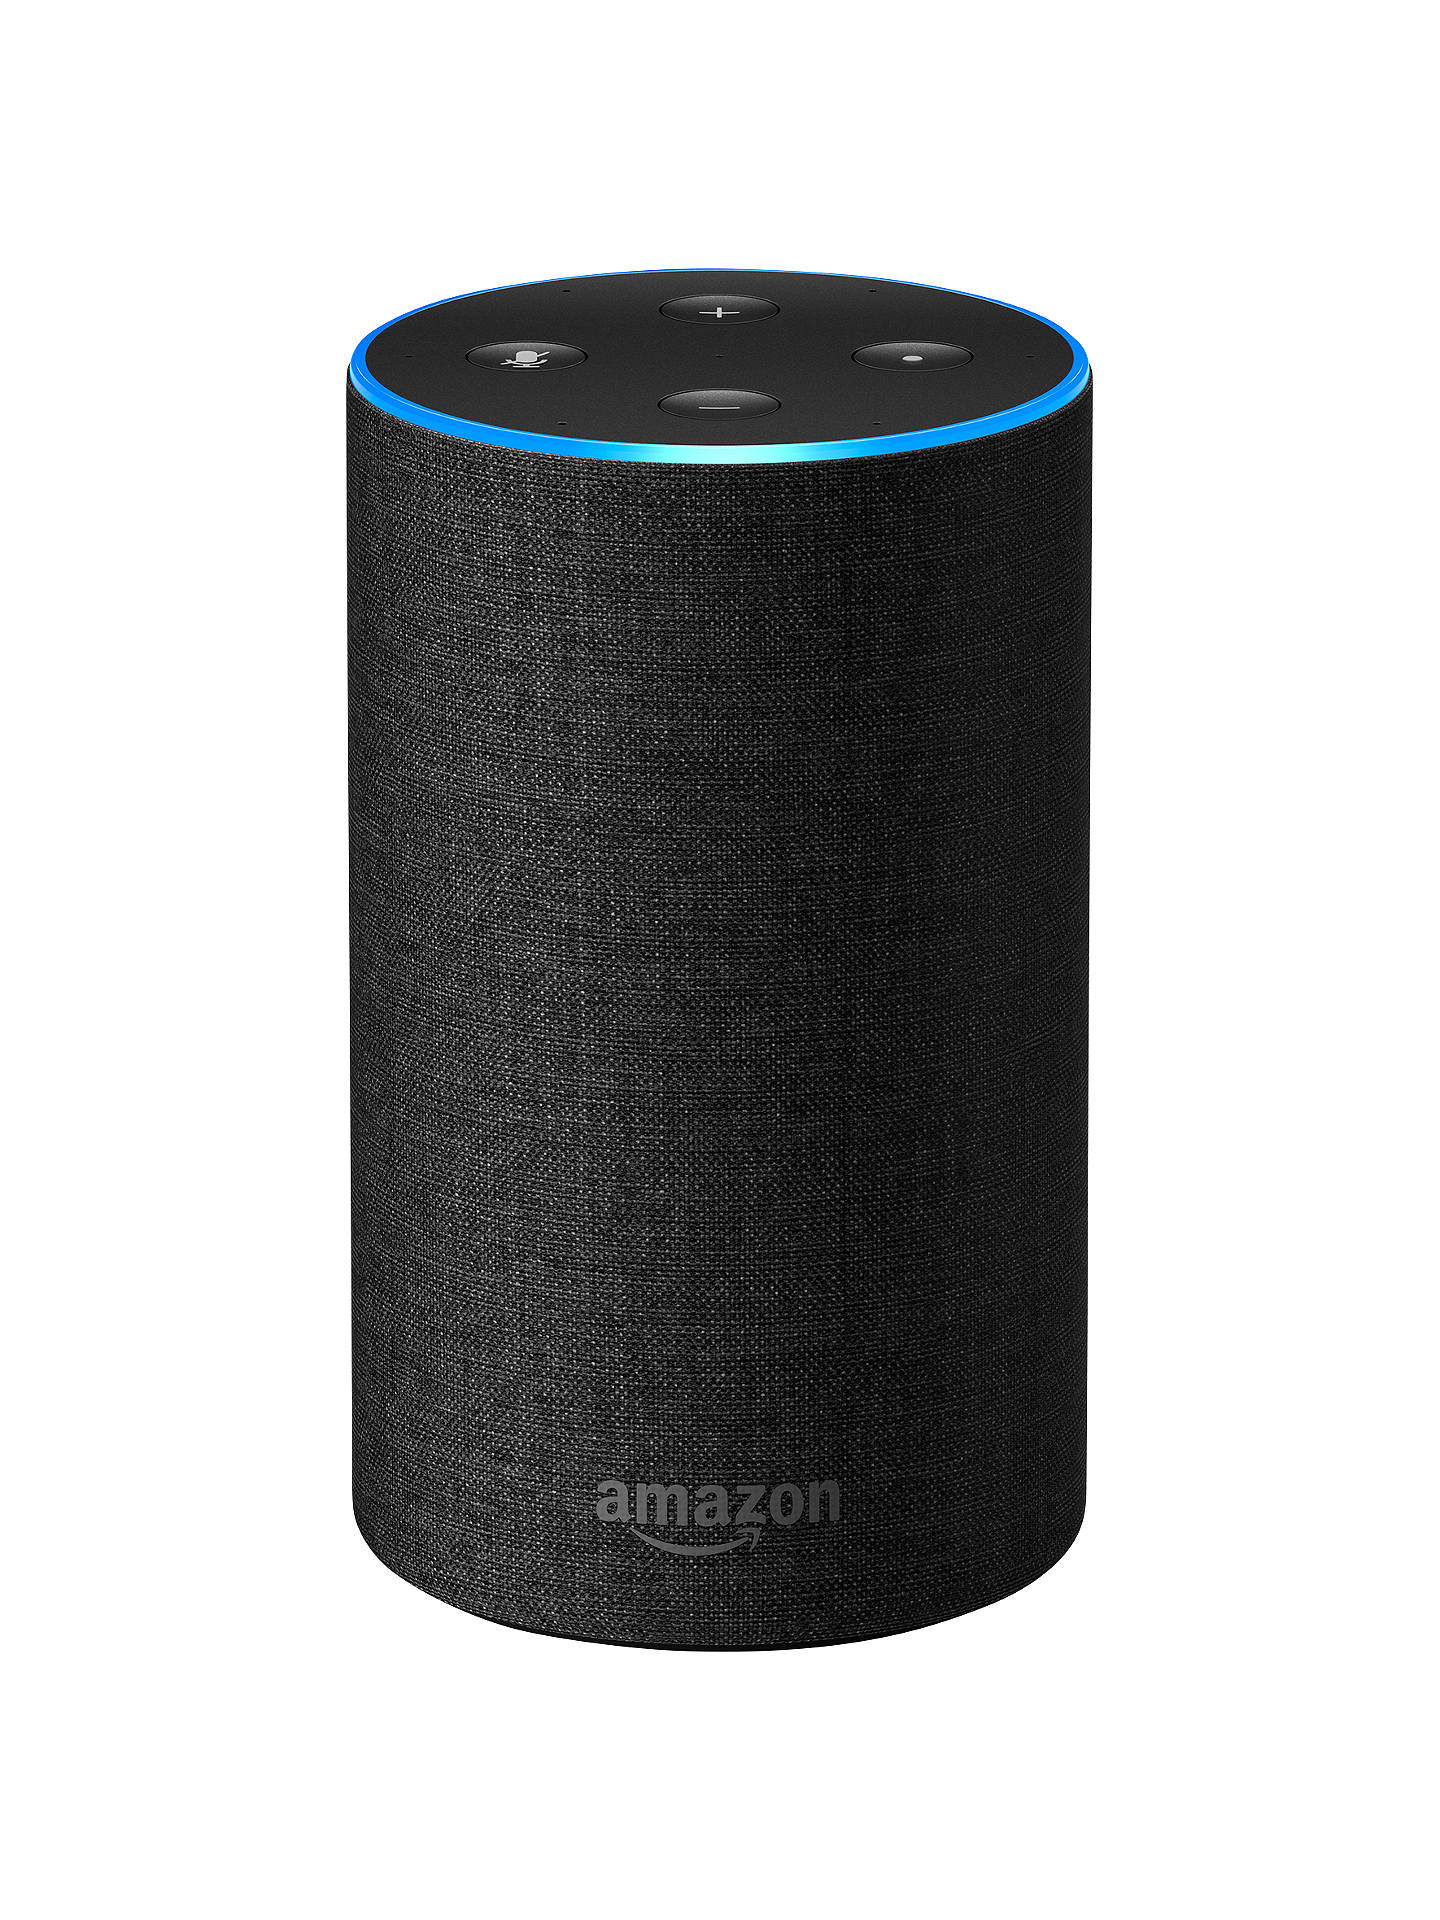 Amazon Echo Smart Speaker With Alexa Voice Recognition Control